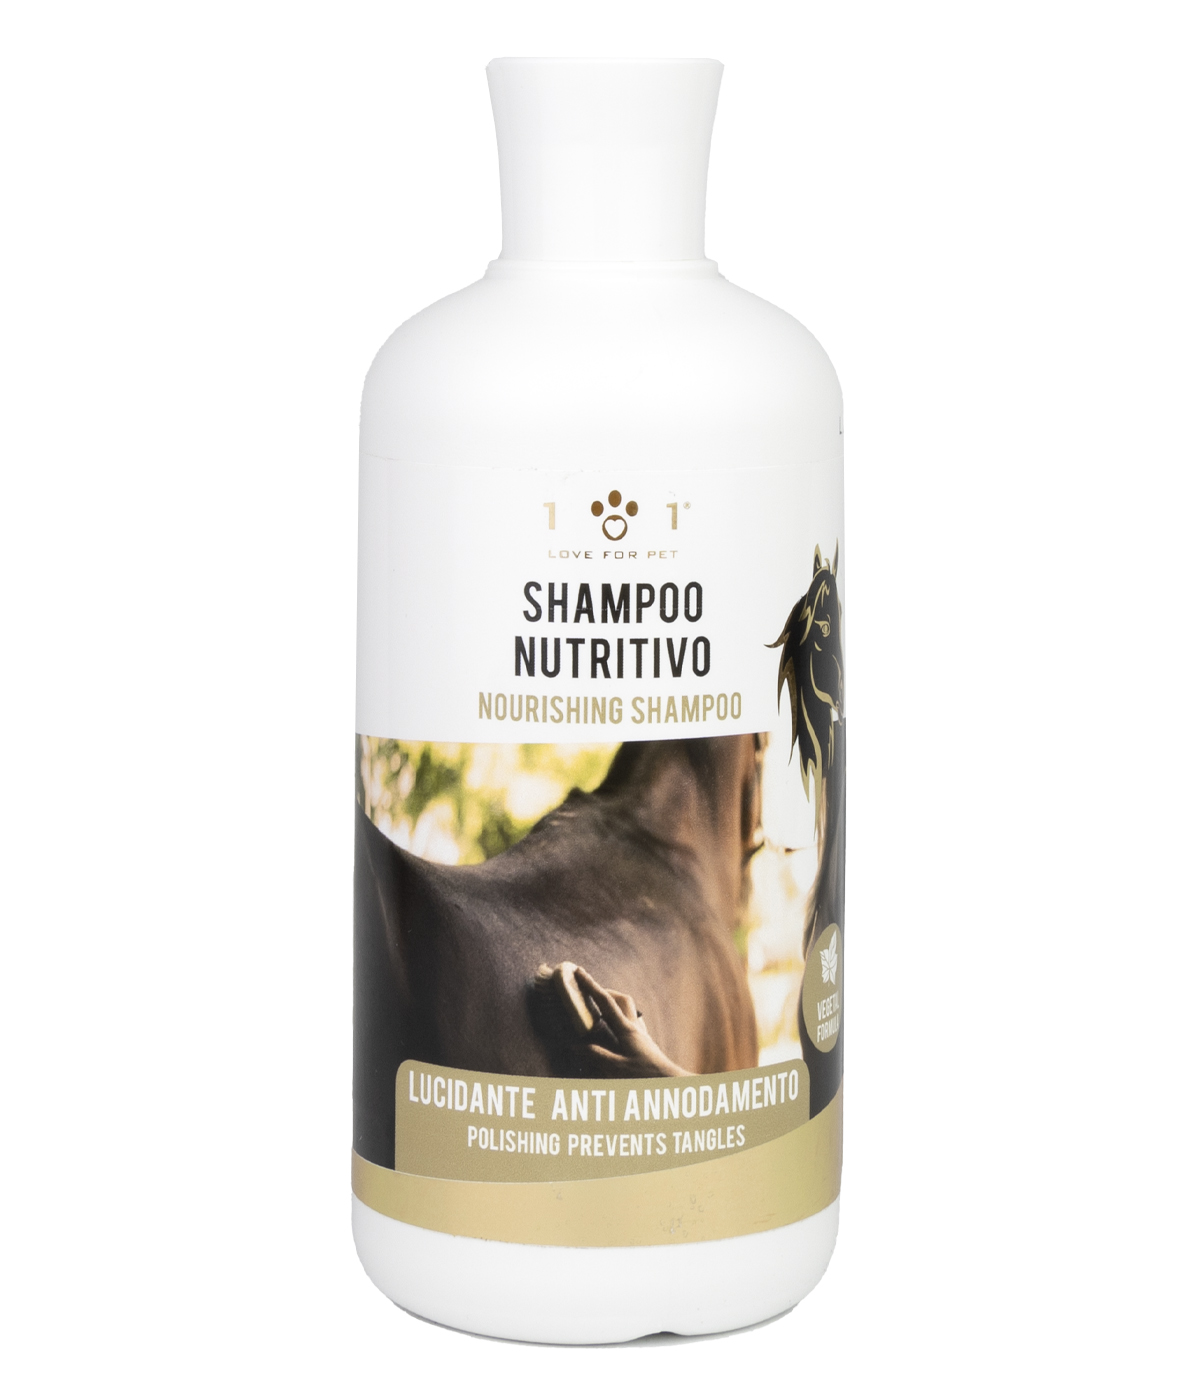 Nourishing Shampoo for Horses